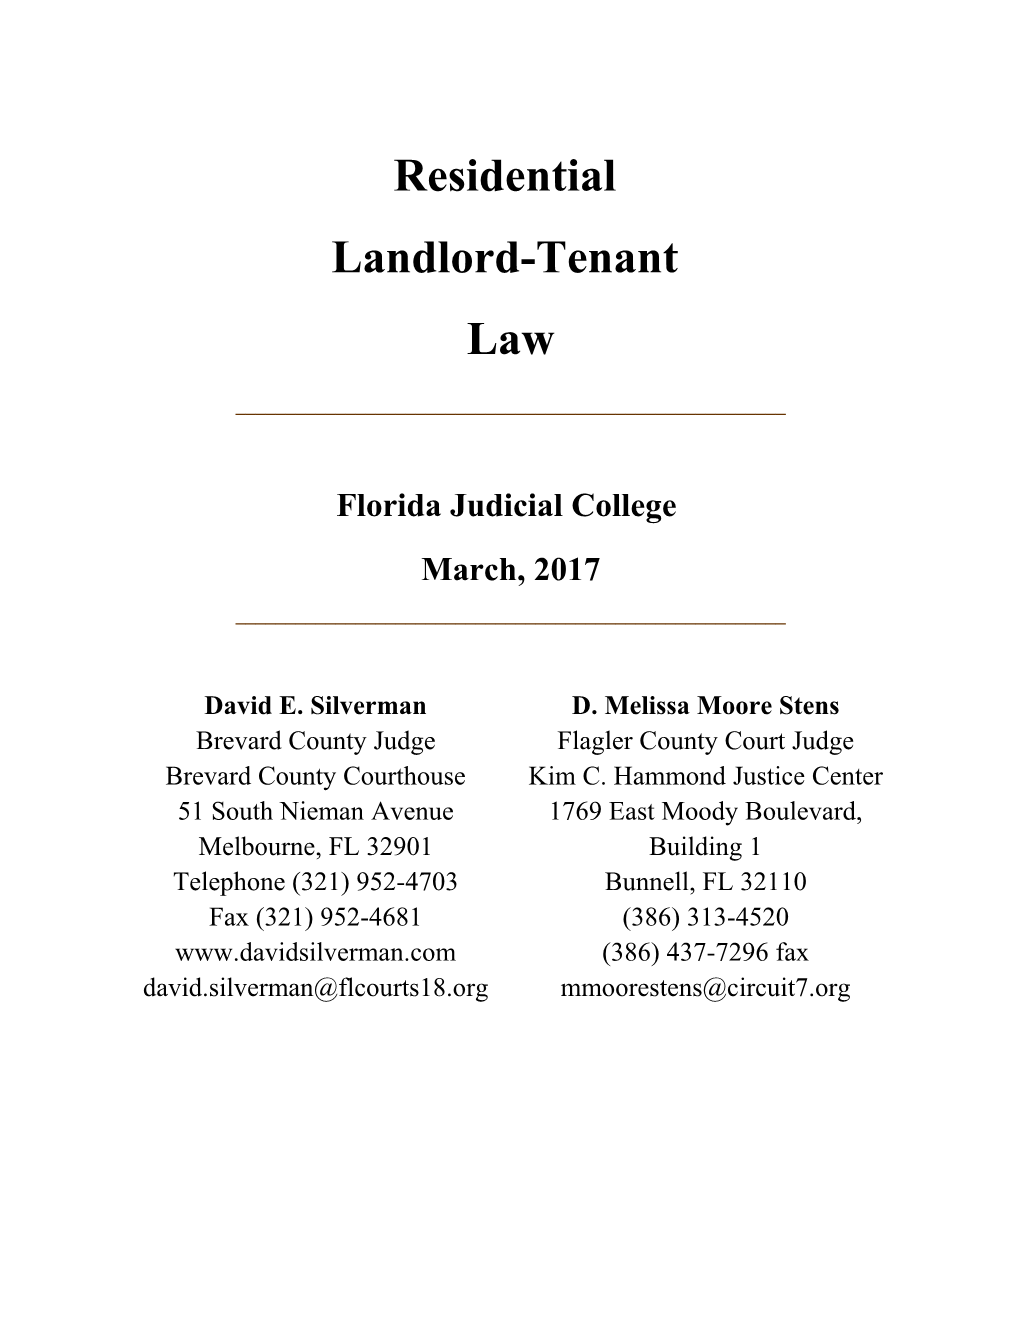 Residential Landlord/Tenant Law